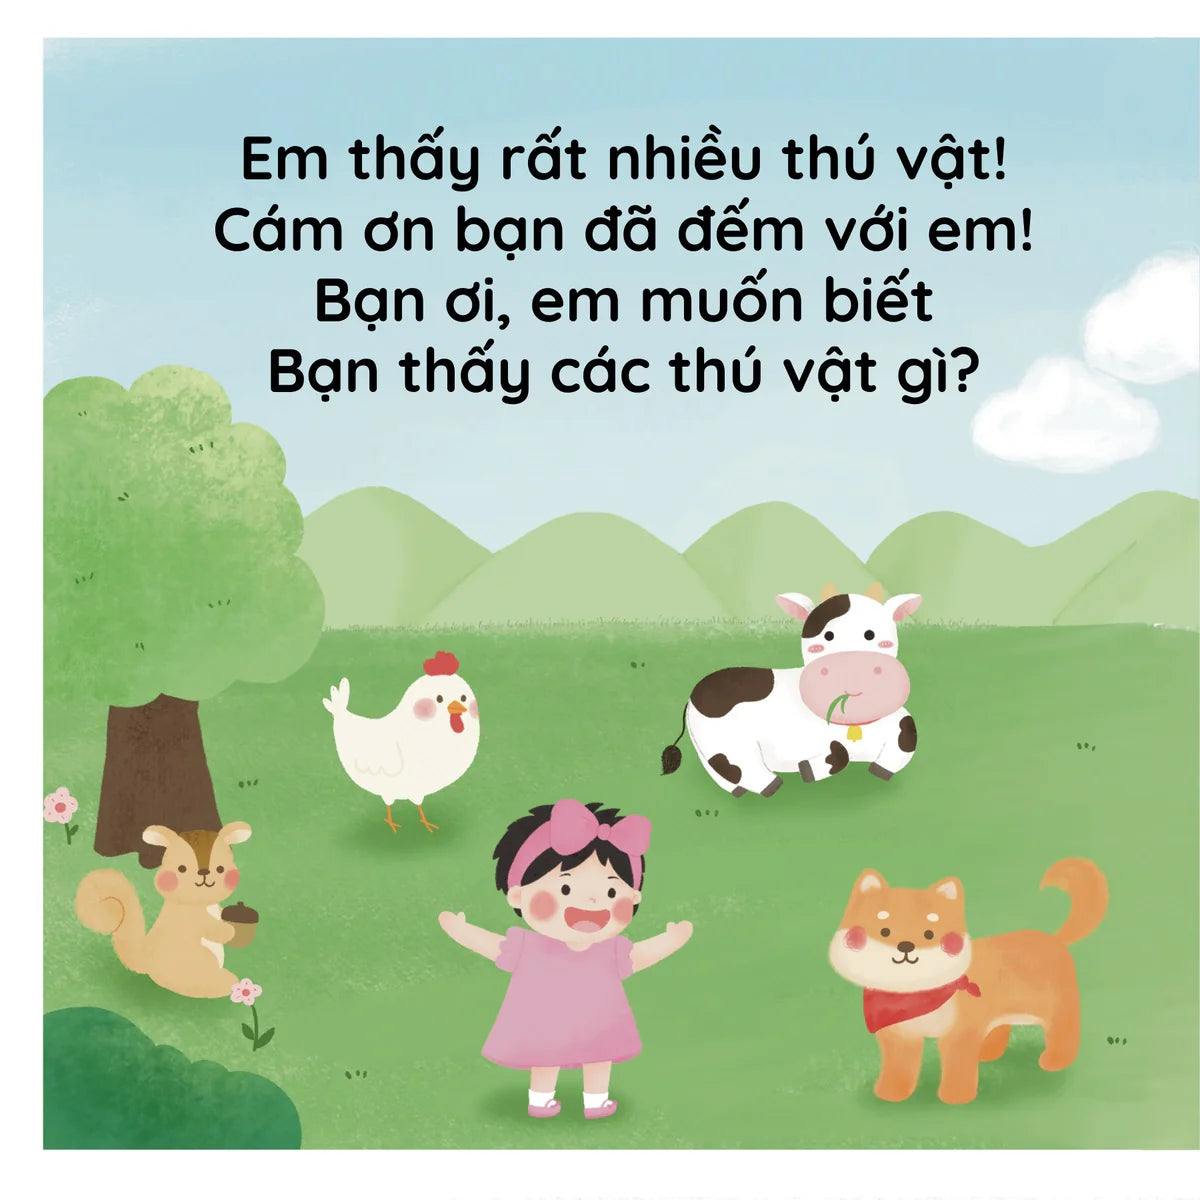 Gemma’s Farm Adventure: Số và Thú Vật - A Bilingual Board Book